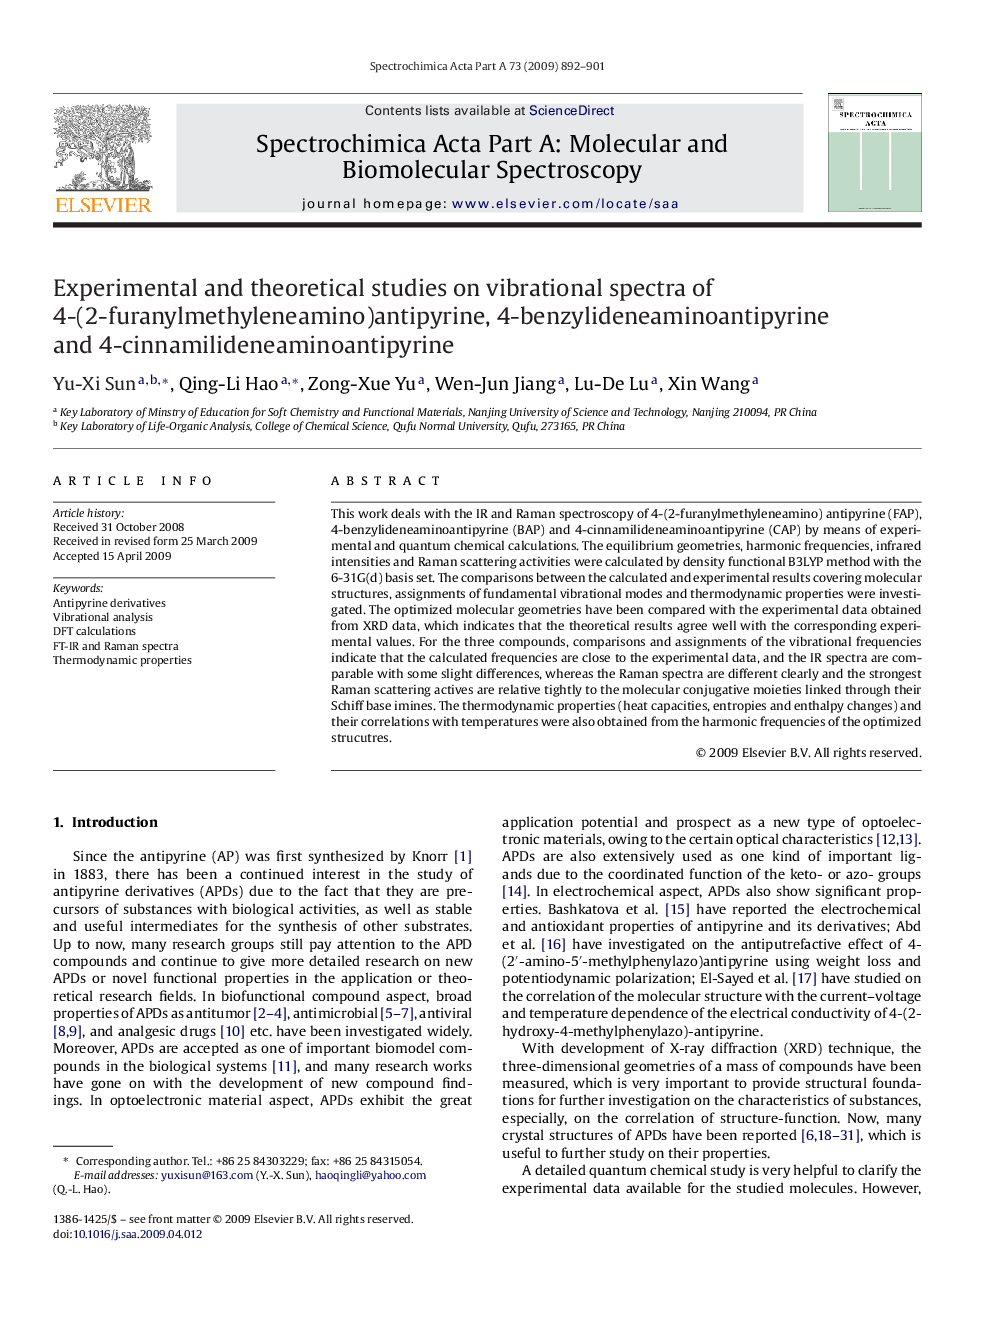 Experimental and theoretical studies on vibrational spectra of 4-(2-furanylmethyleneamino)antipyrine, 4-benzylideneaminoantipyrine and 4-cinnamilideneaminoantipyrine